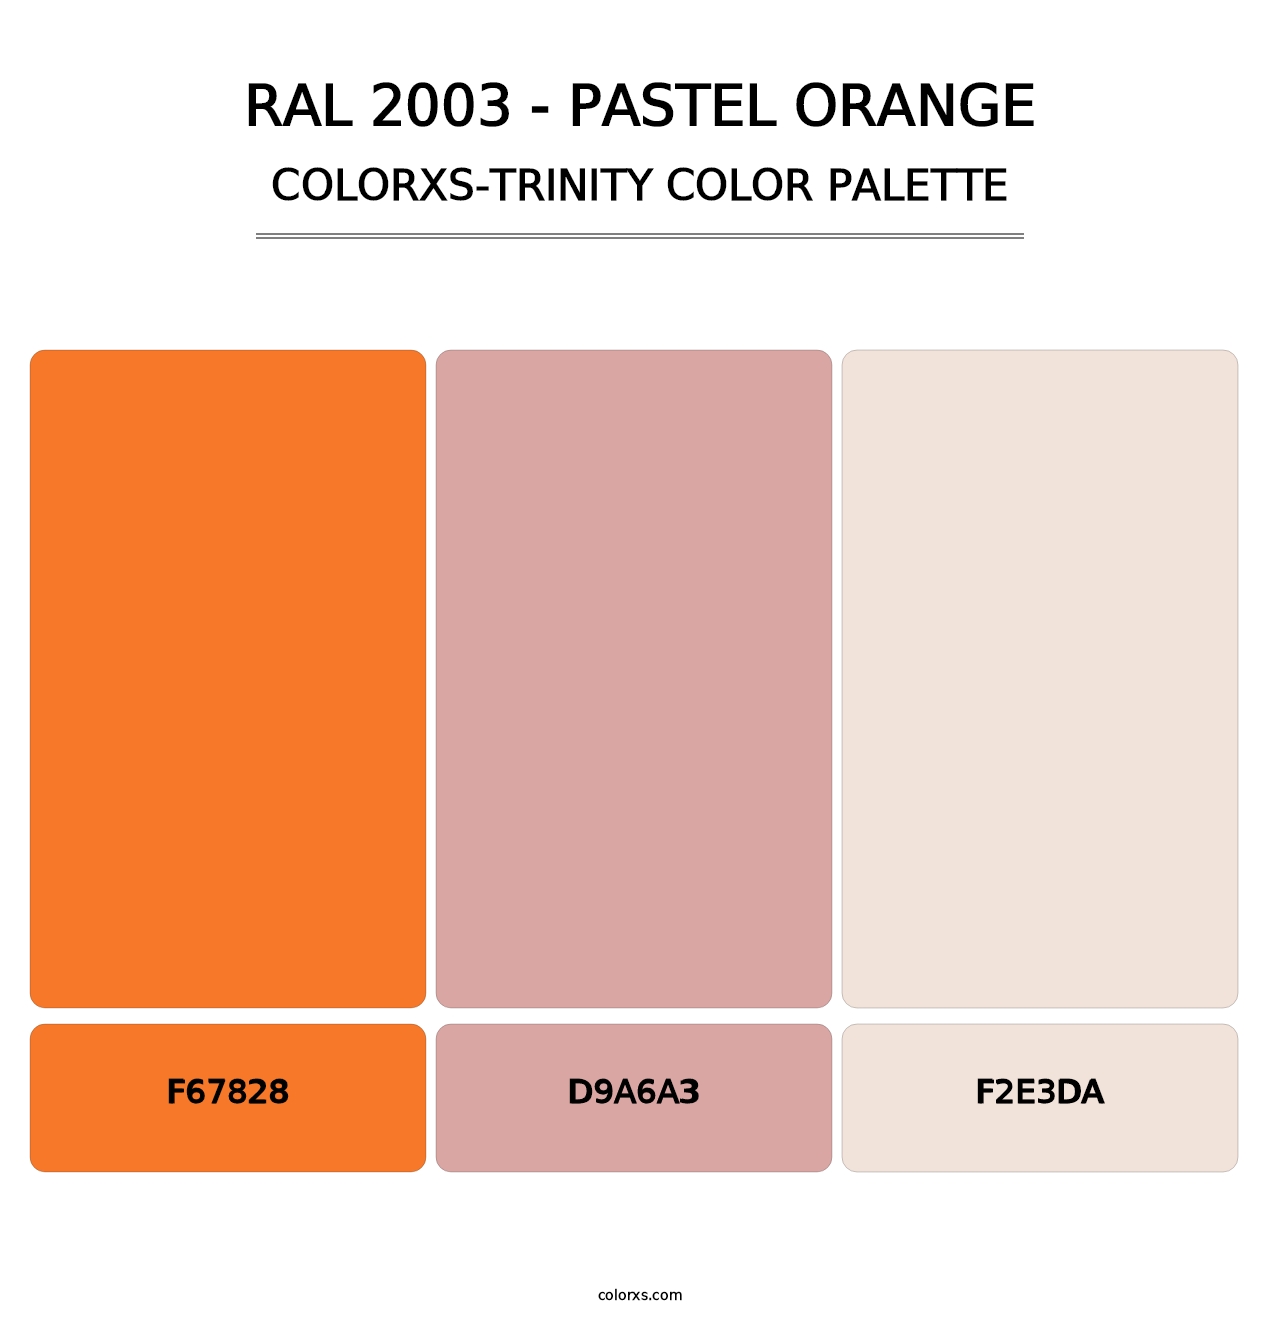 RAL 2003 - Pastel Orange - Colorxs Trinity Palette